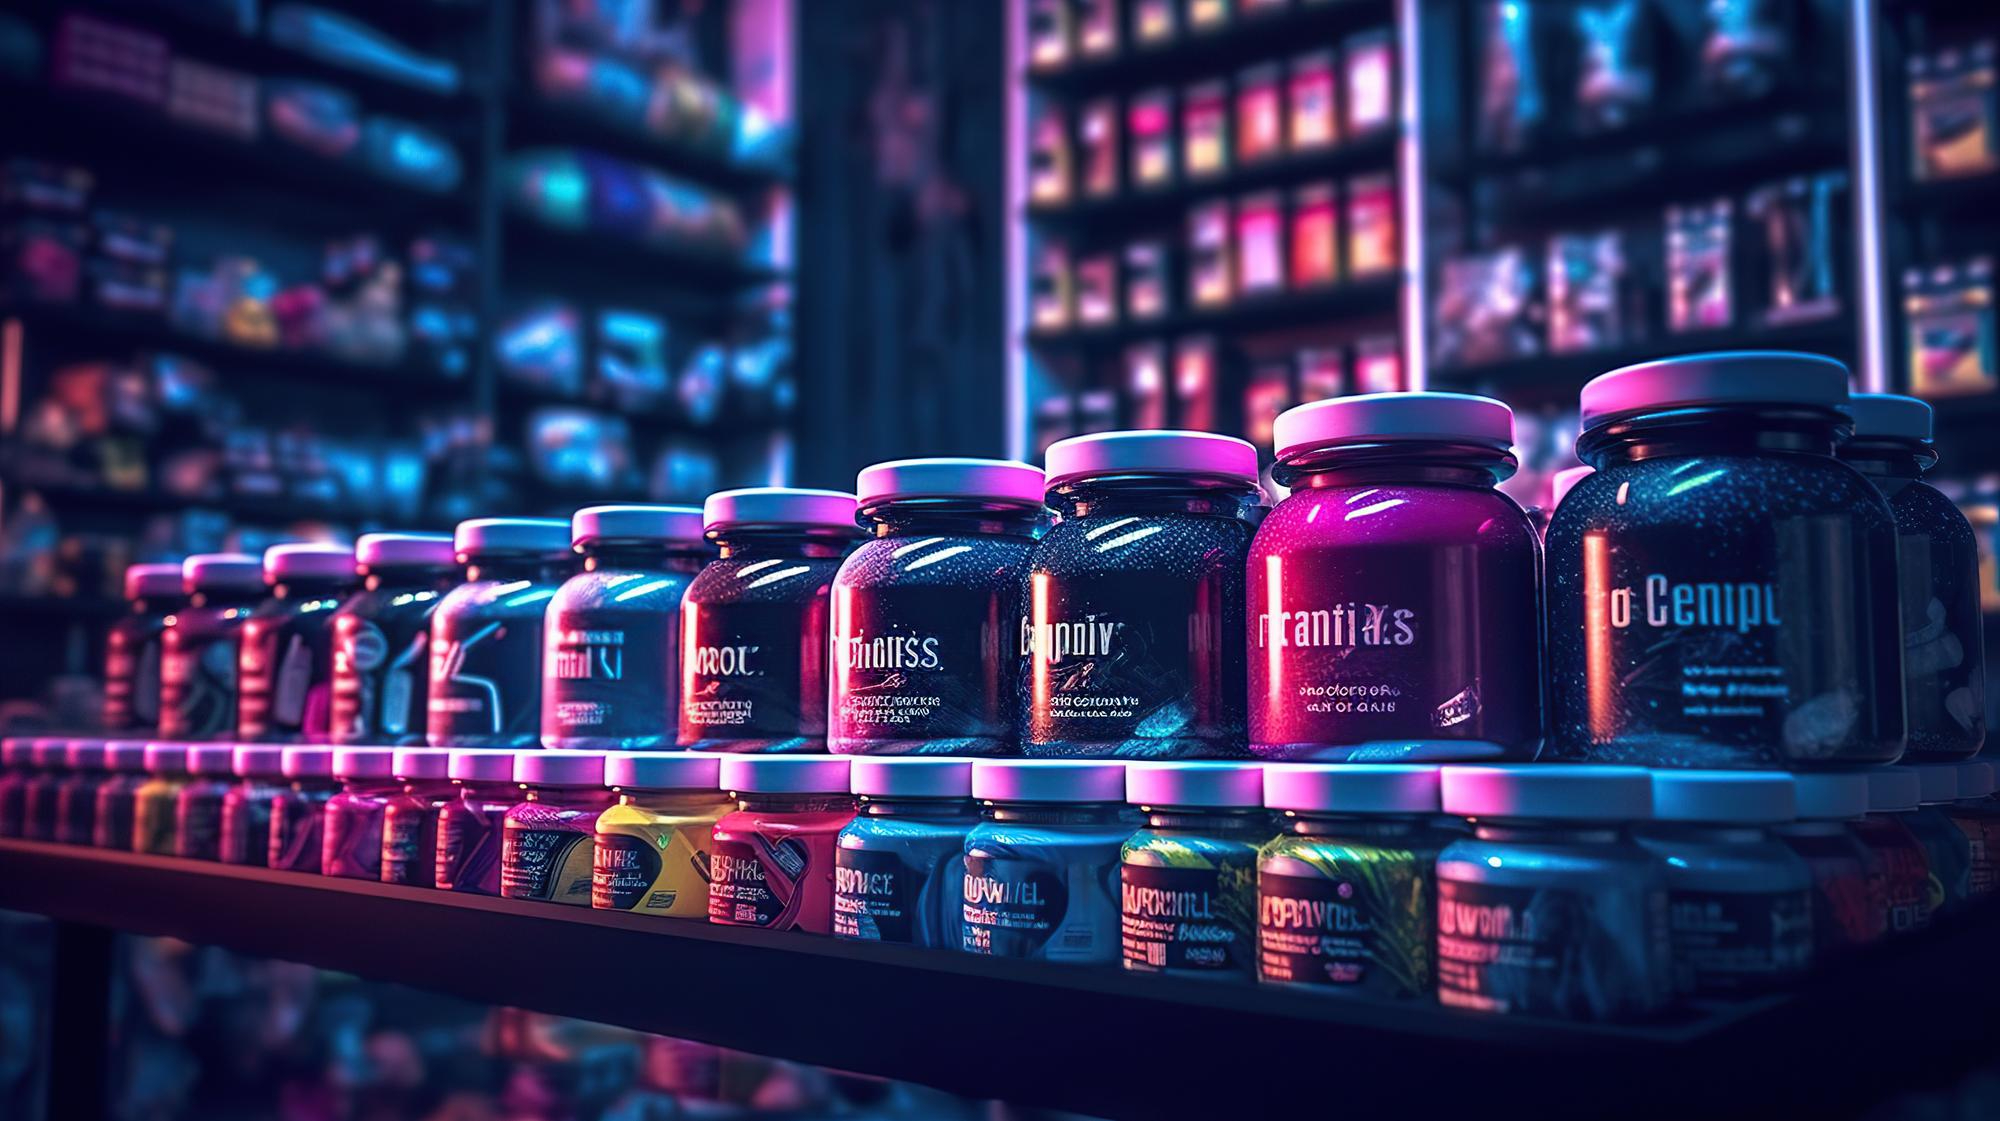 supplements in a supermarket shelf image